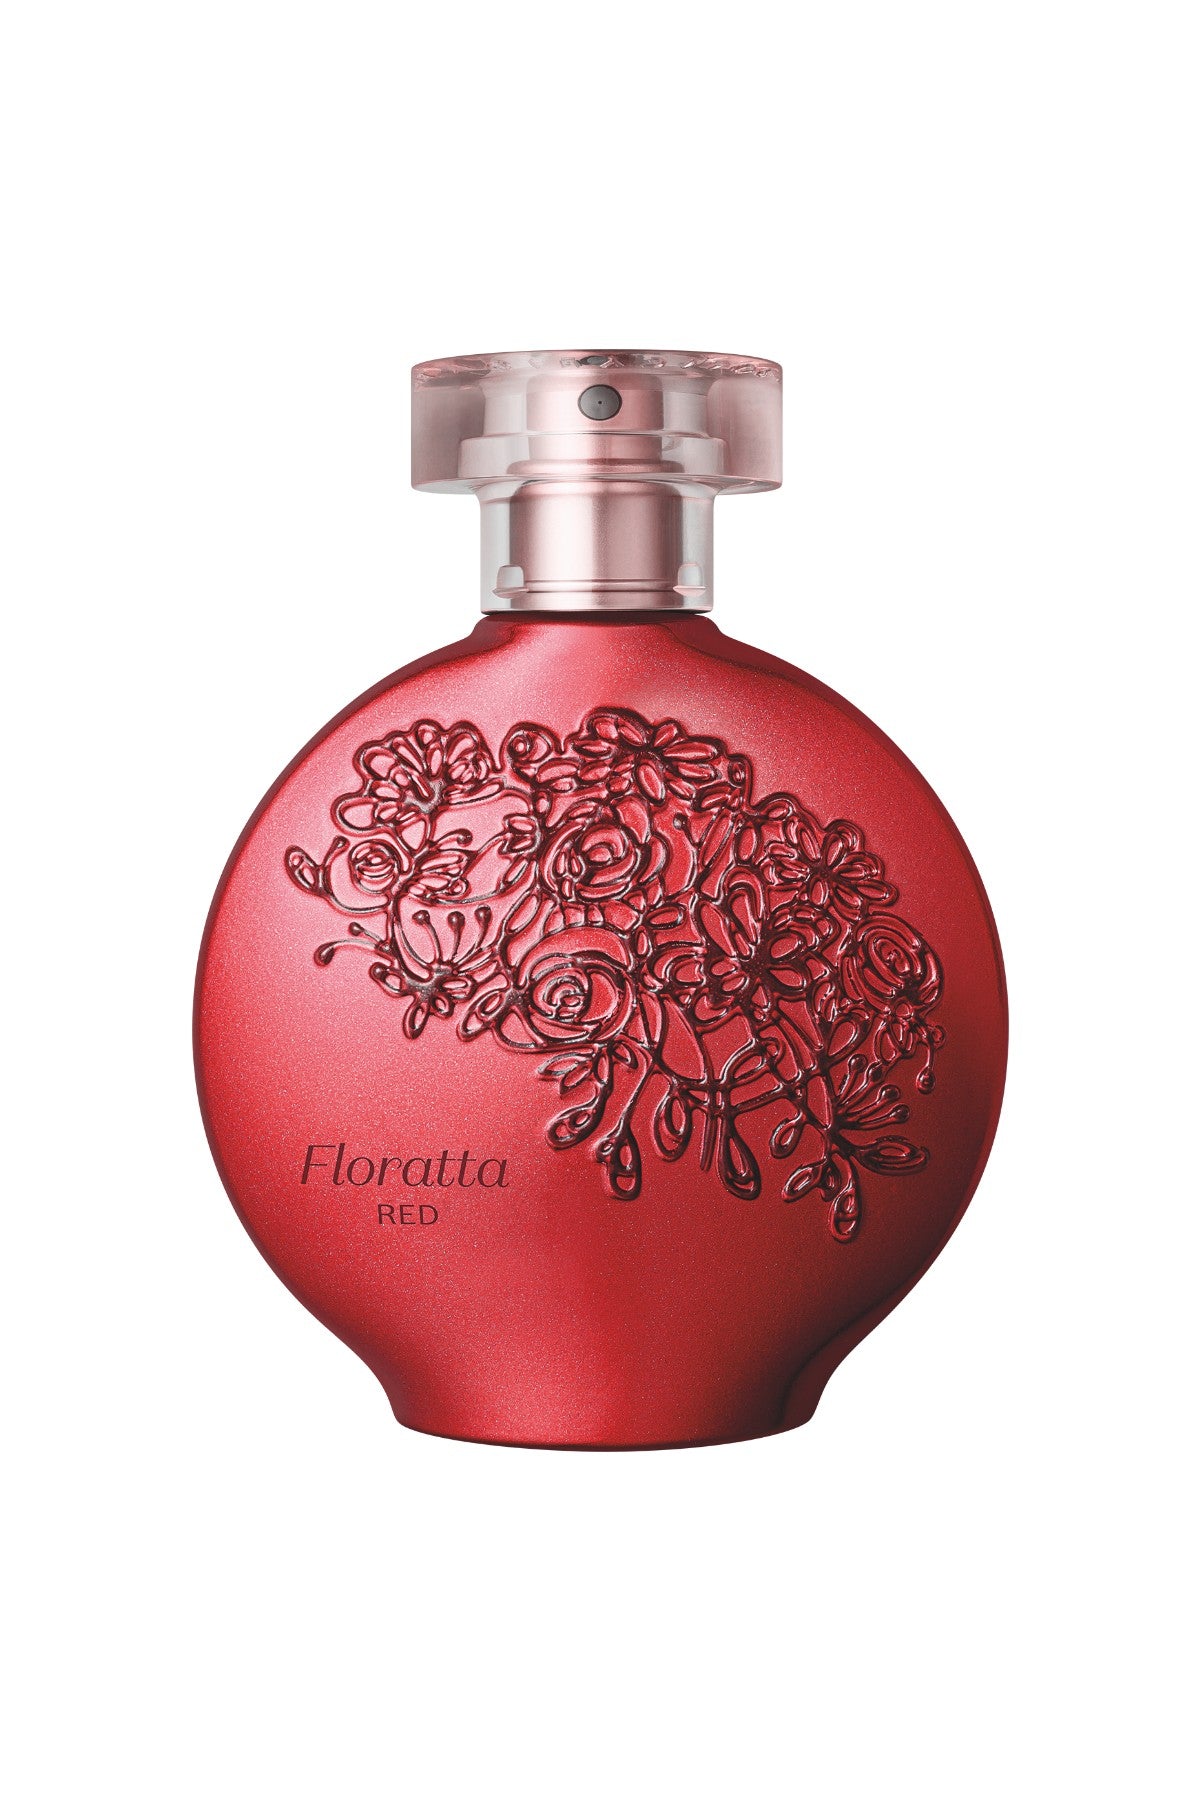 O Boticario FLORATTA Any fragrance Eau de Toilette Women's Perfume